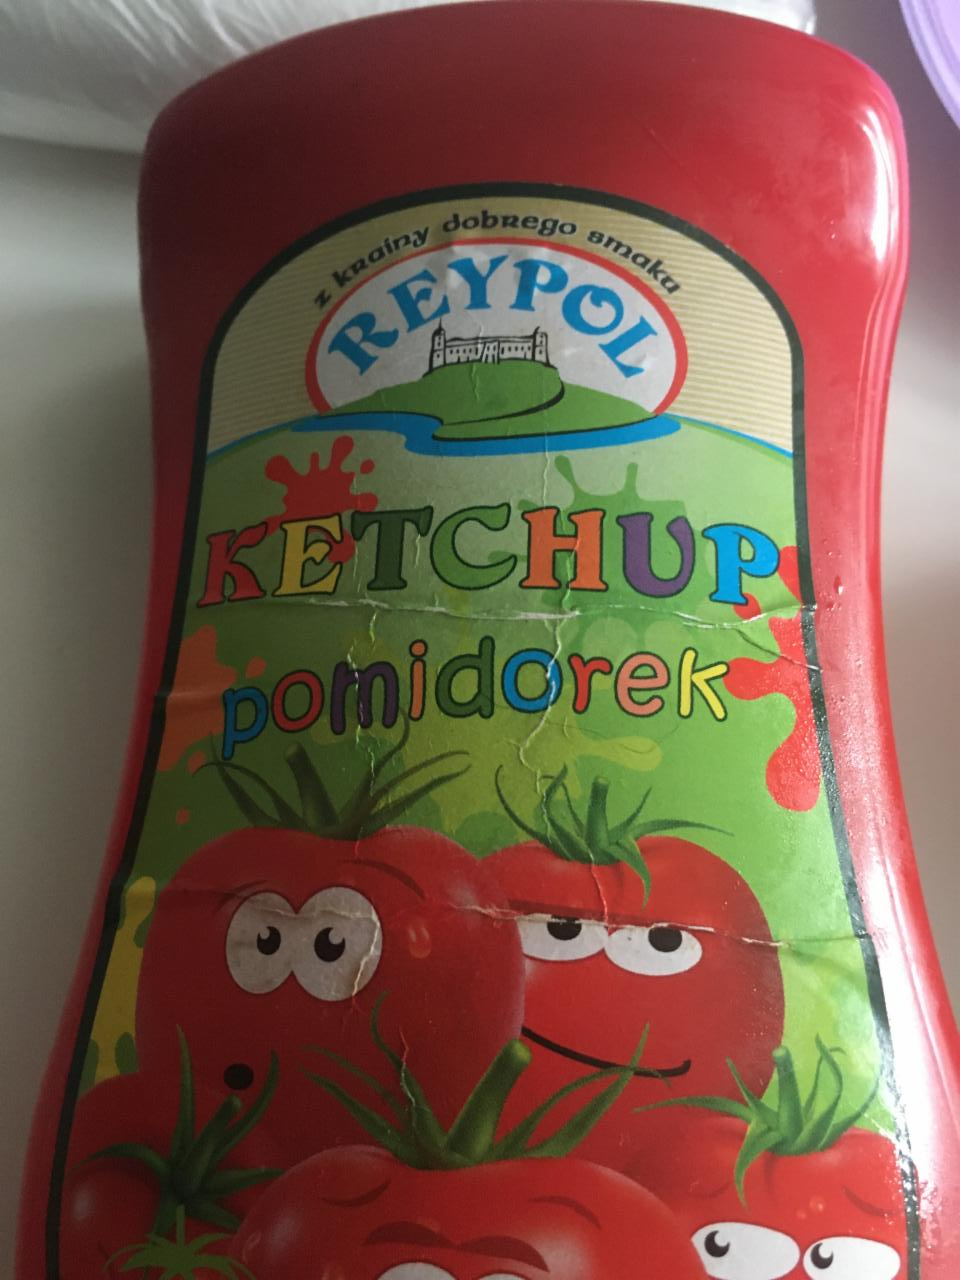 Fotografie - Ketchup pomidorek Reypol